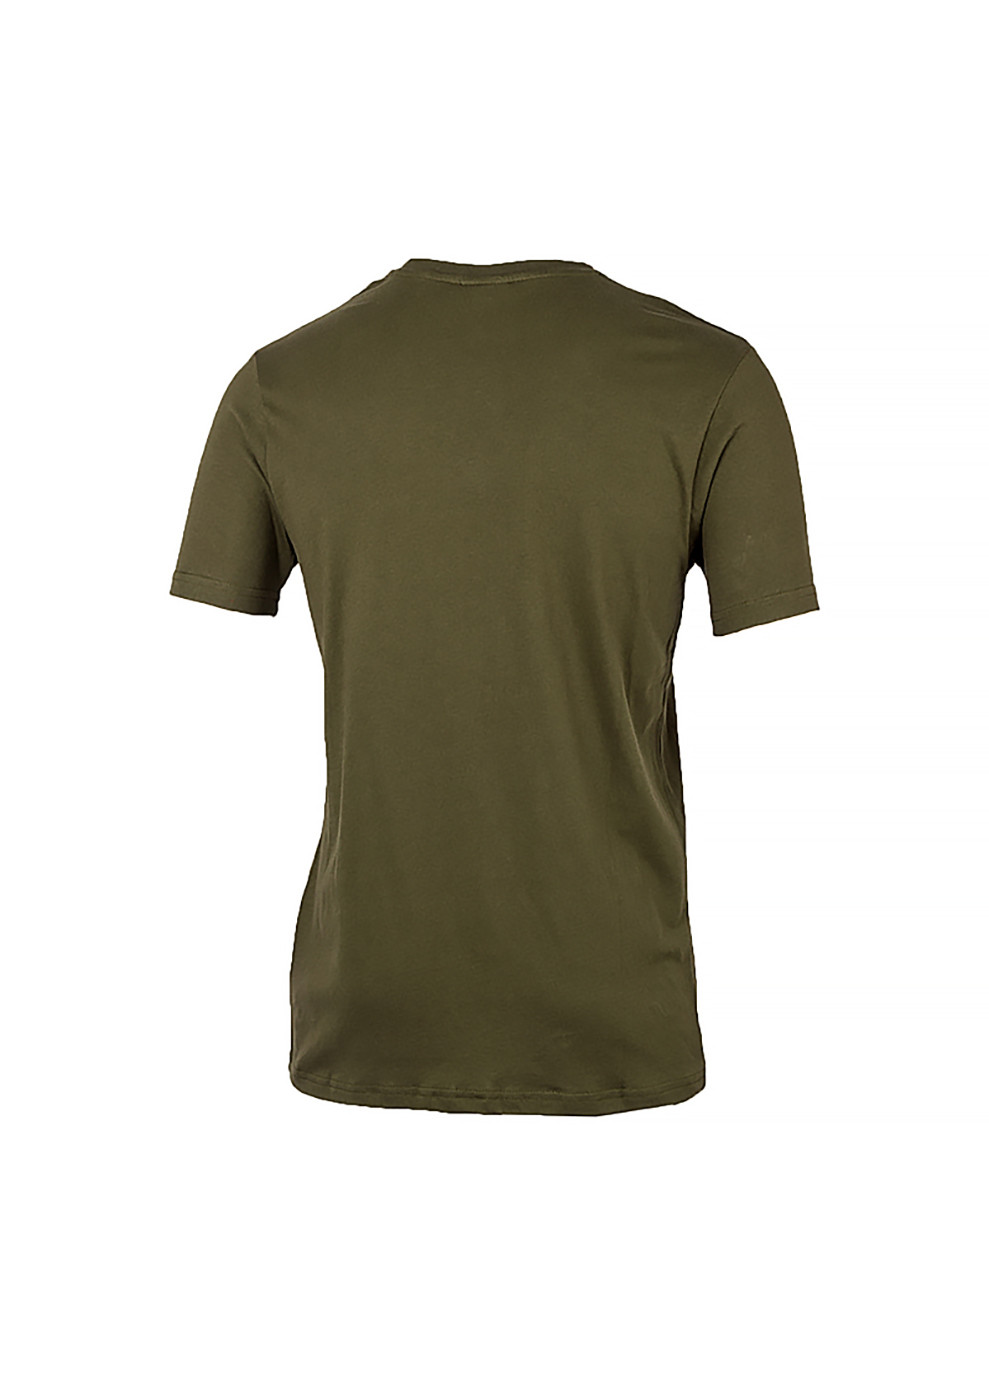 Хаки (оливковая) мужская футболка sl prado хаки xl (shc07405-khaki xl) Ellesse